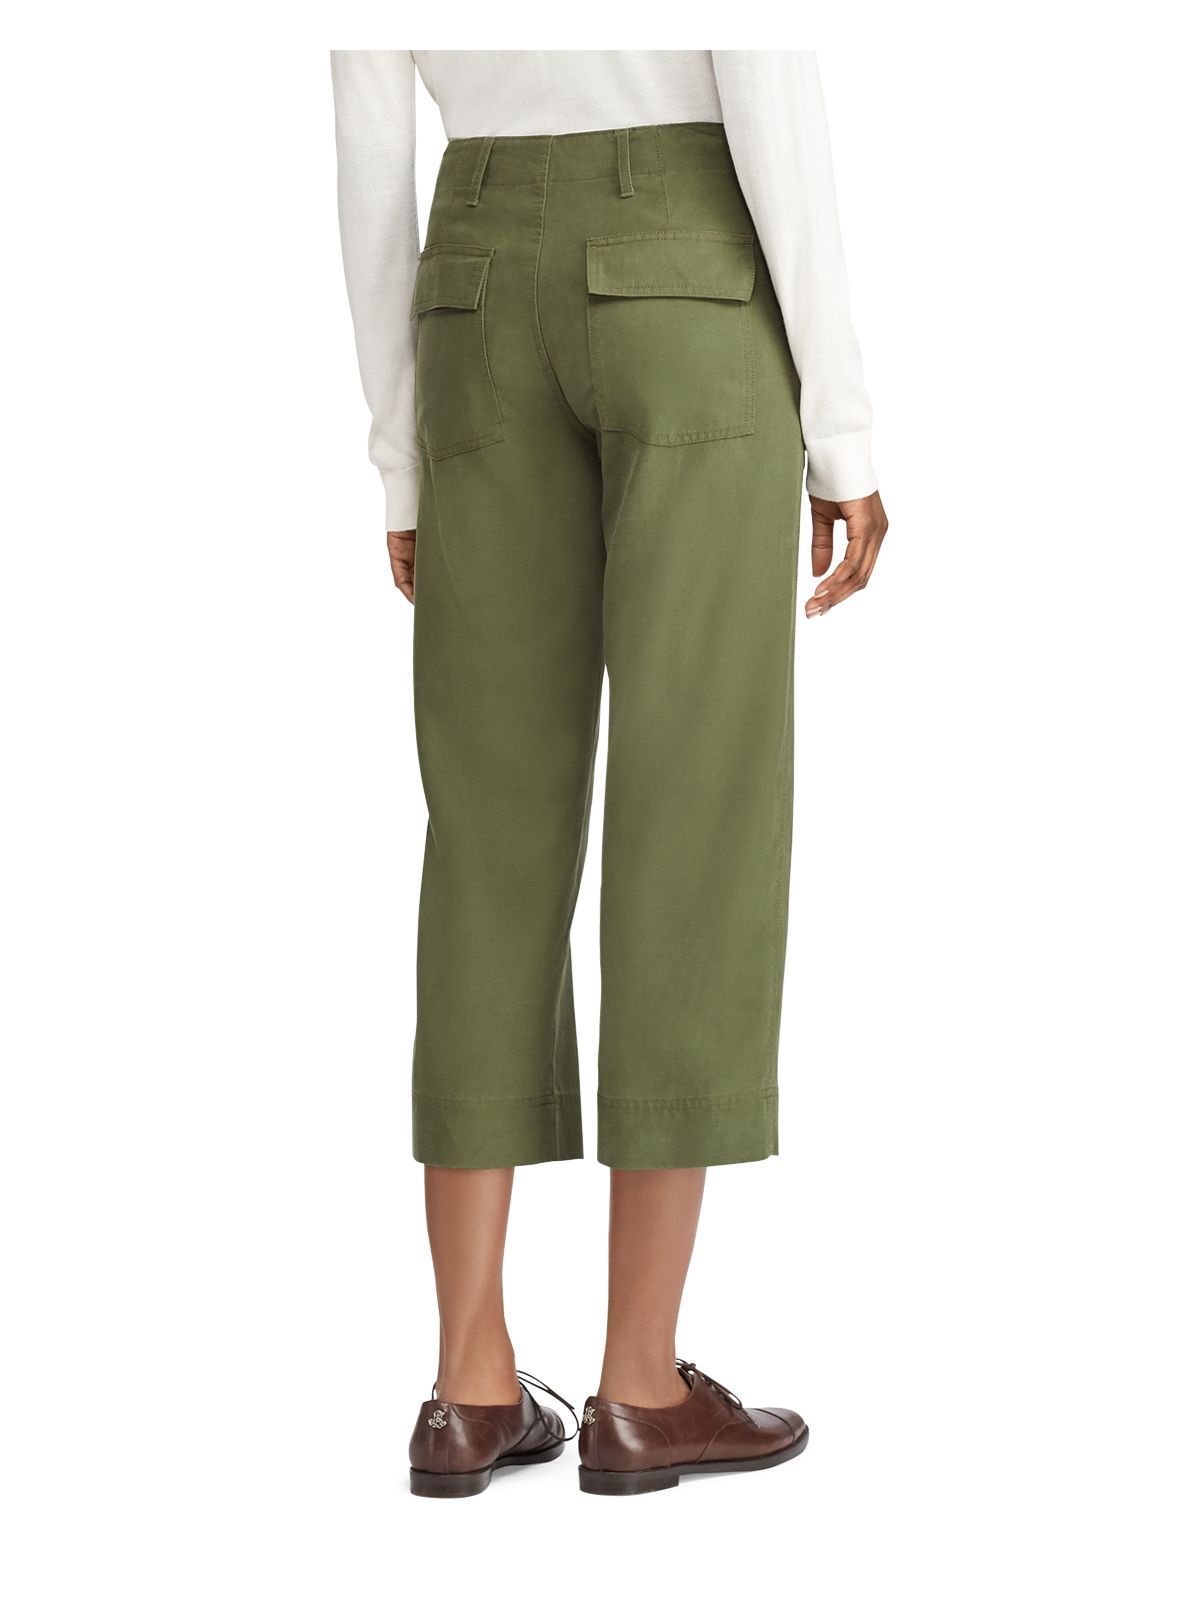 RALPH LAUREN Women's Green Cropped Pants